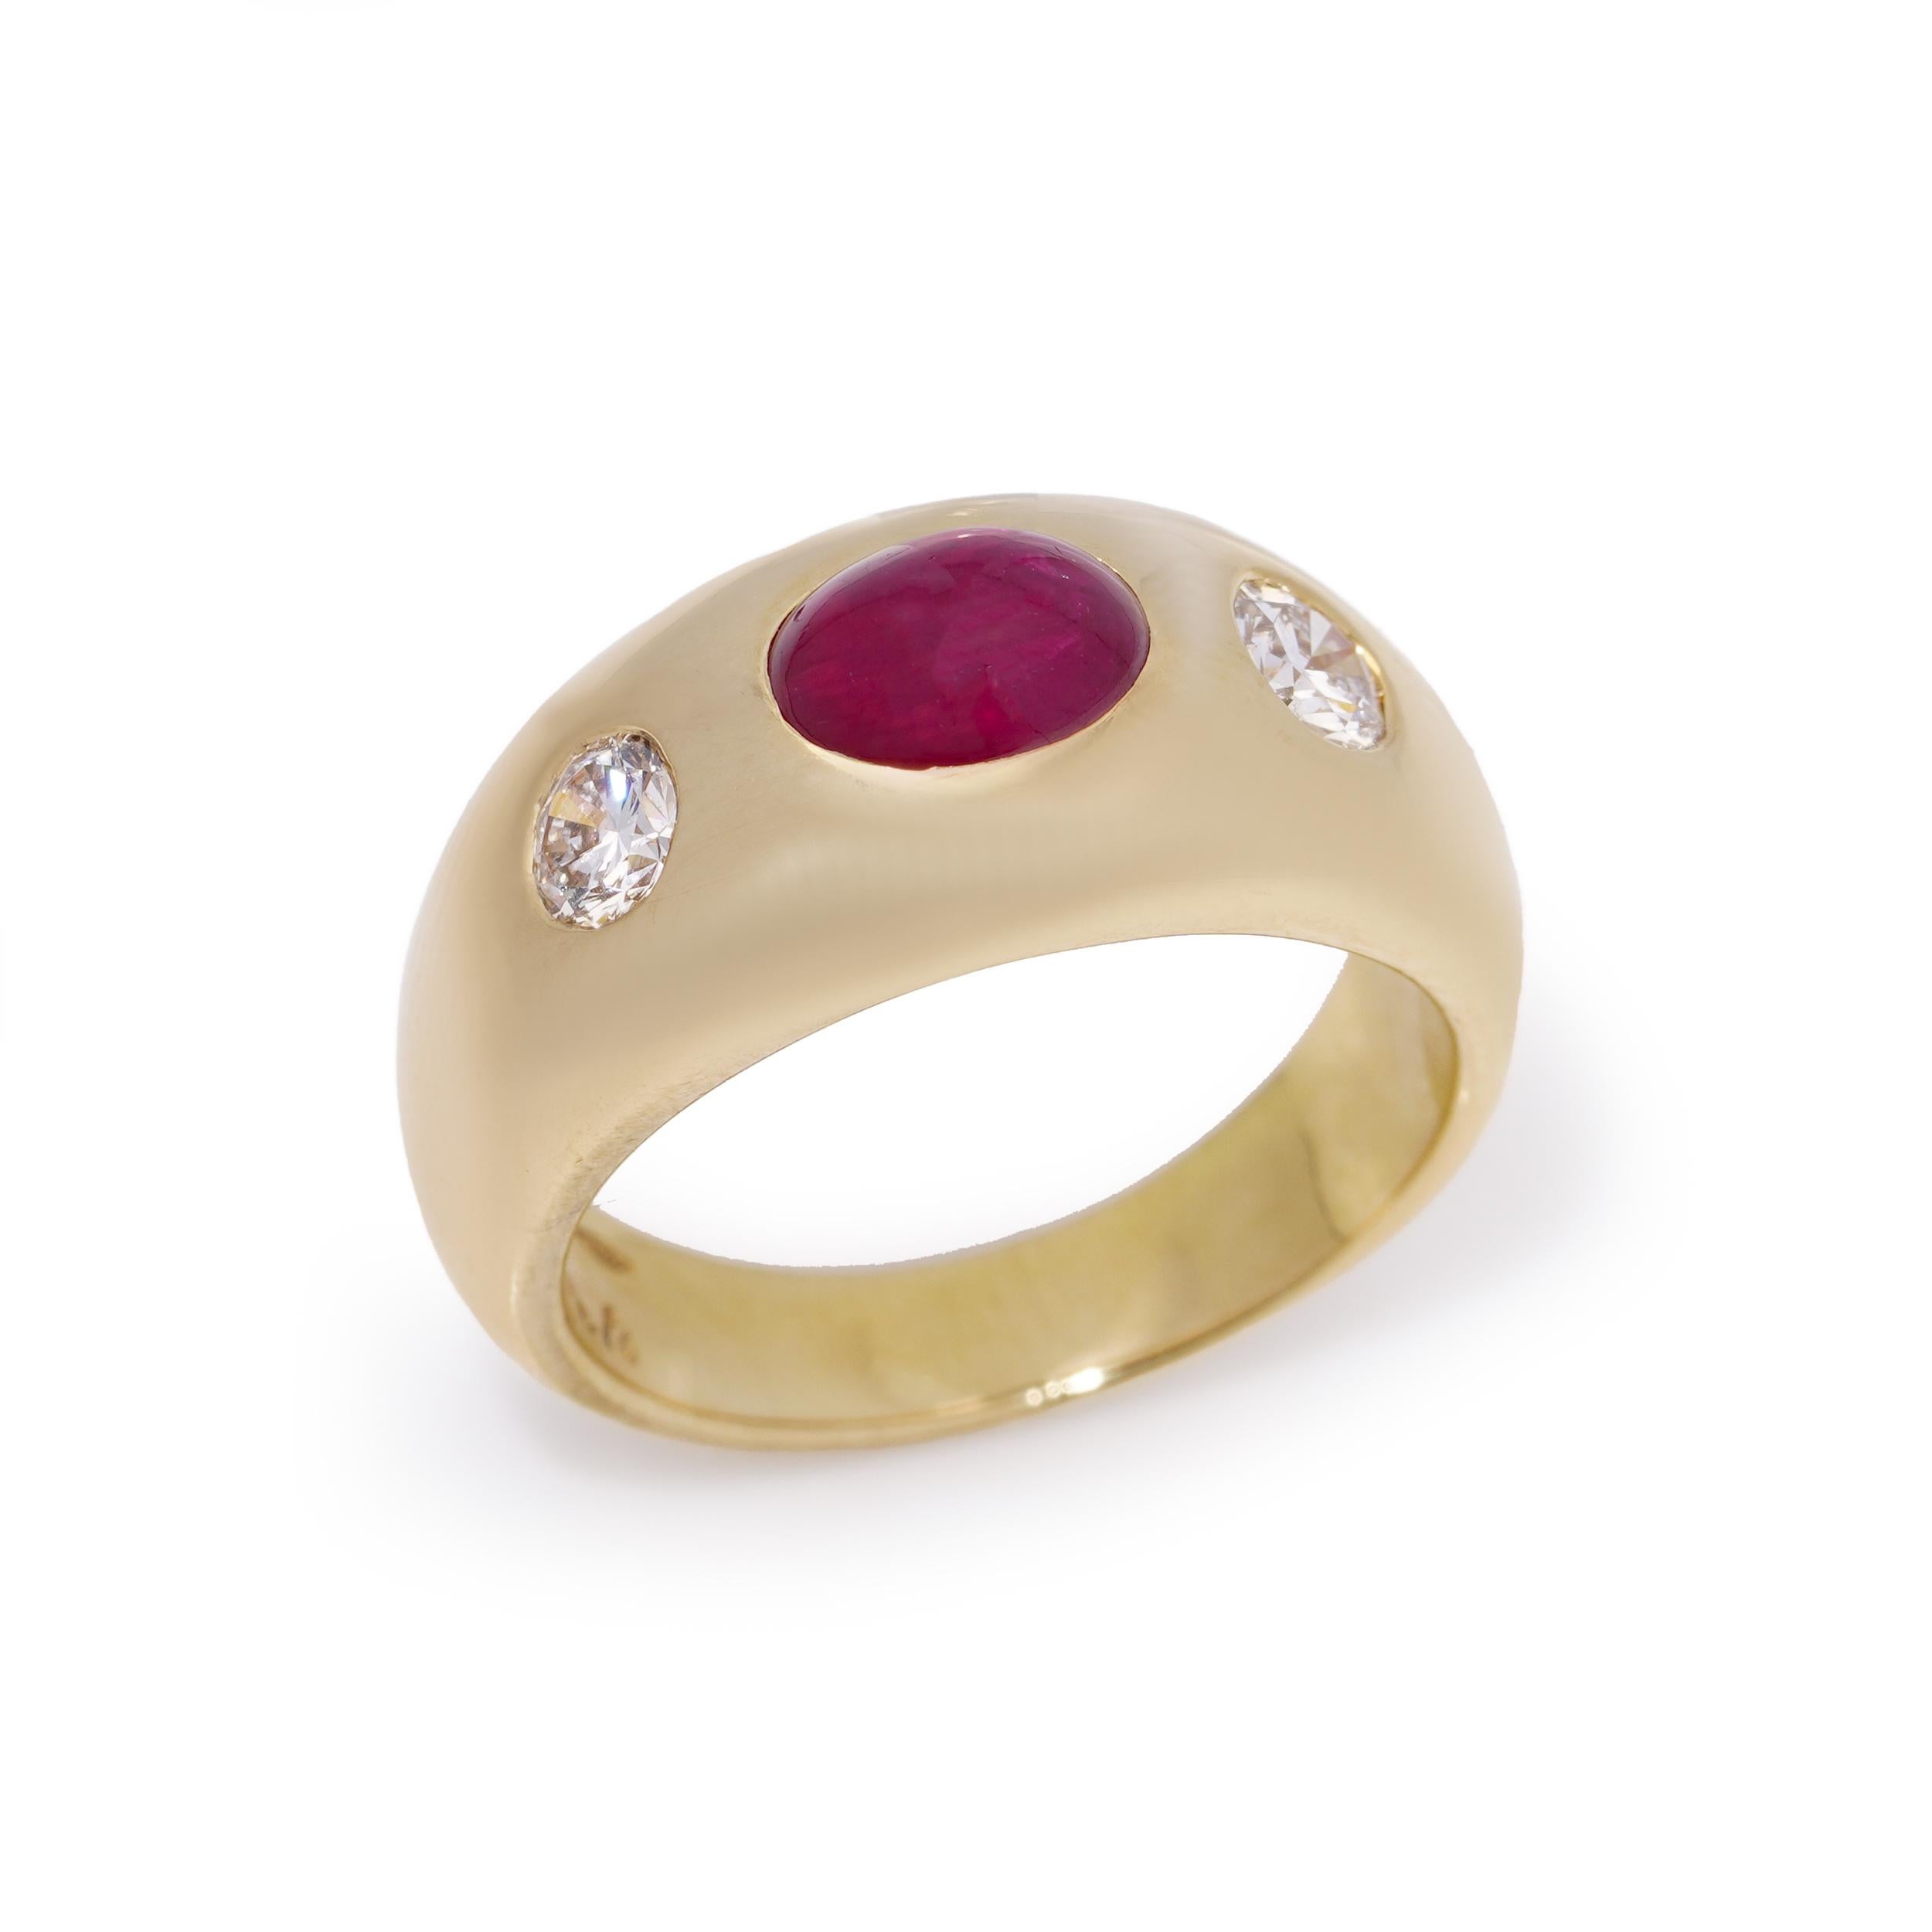 Bvlgari 18kt. gold three - stone Burma Cabochon ruby and diamond ring 1